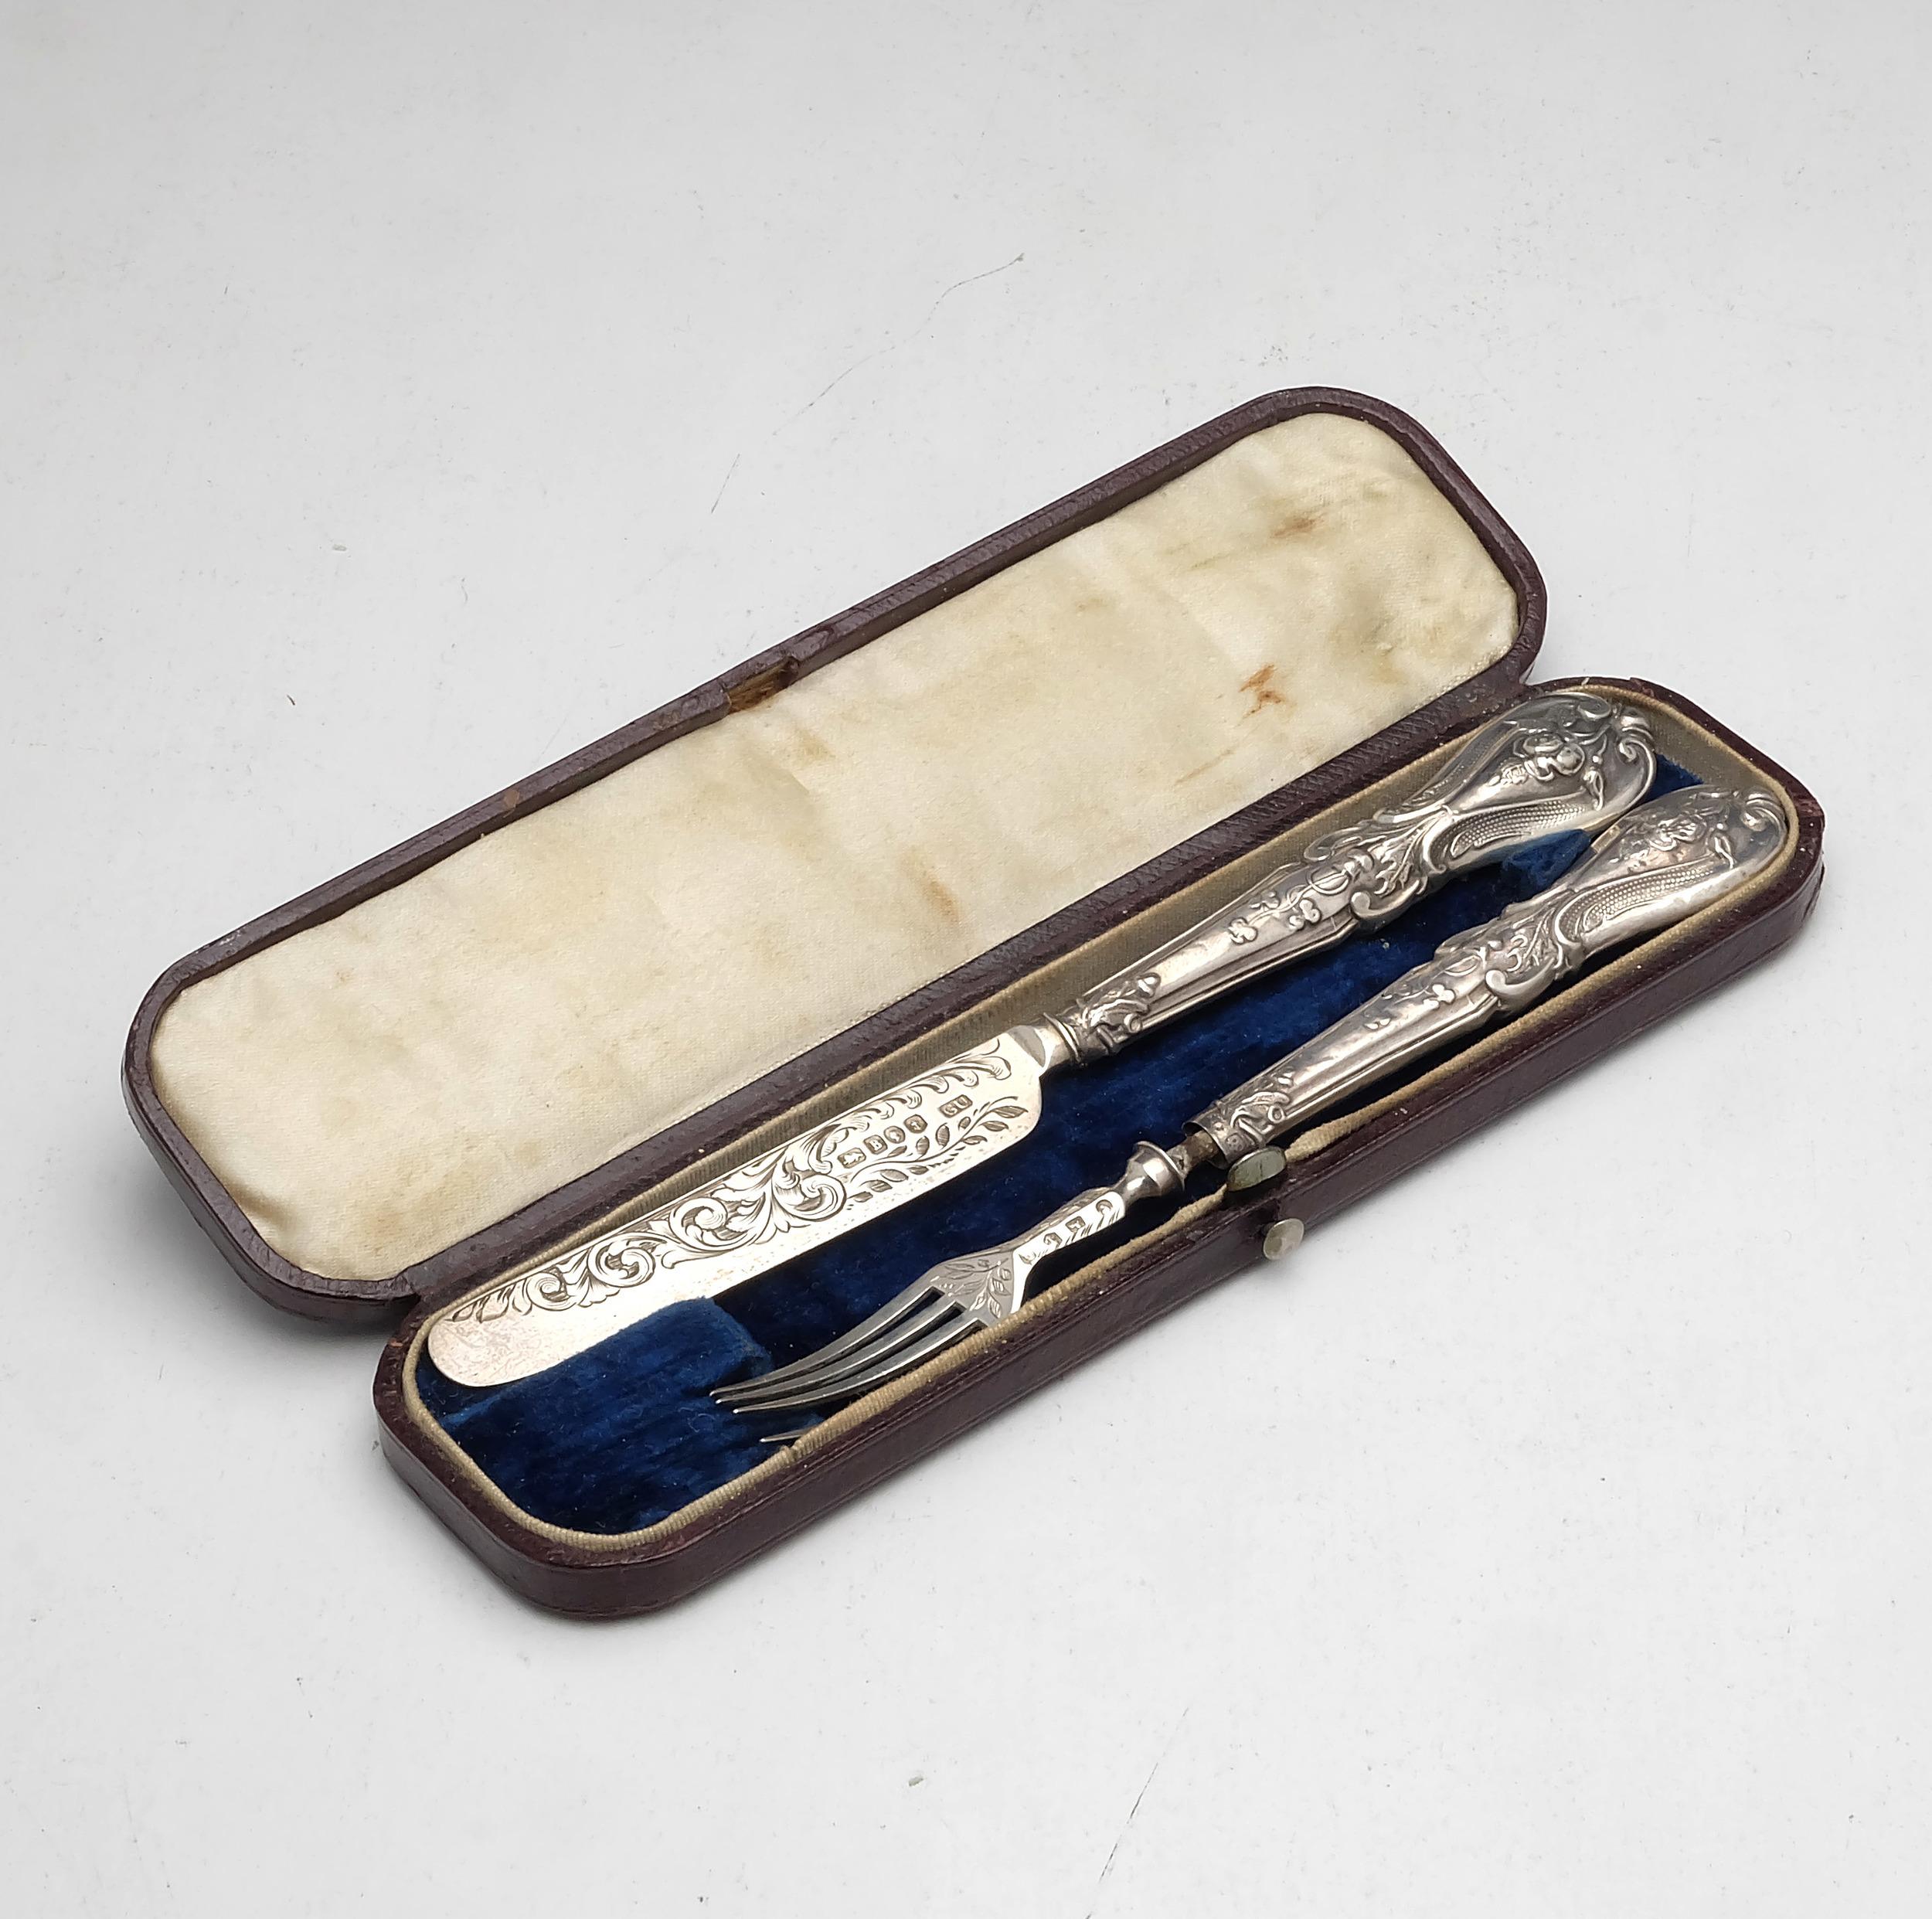 'Cased Sterling Silver Christening Knife and Fork Set Birmingham George Unite 1850 32g'